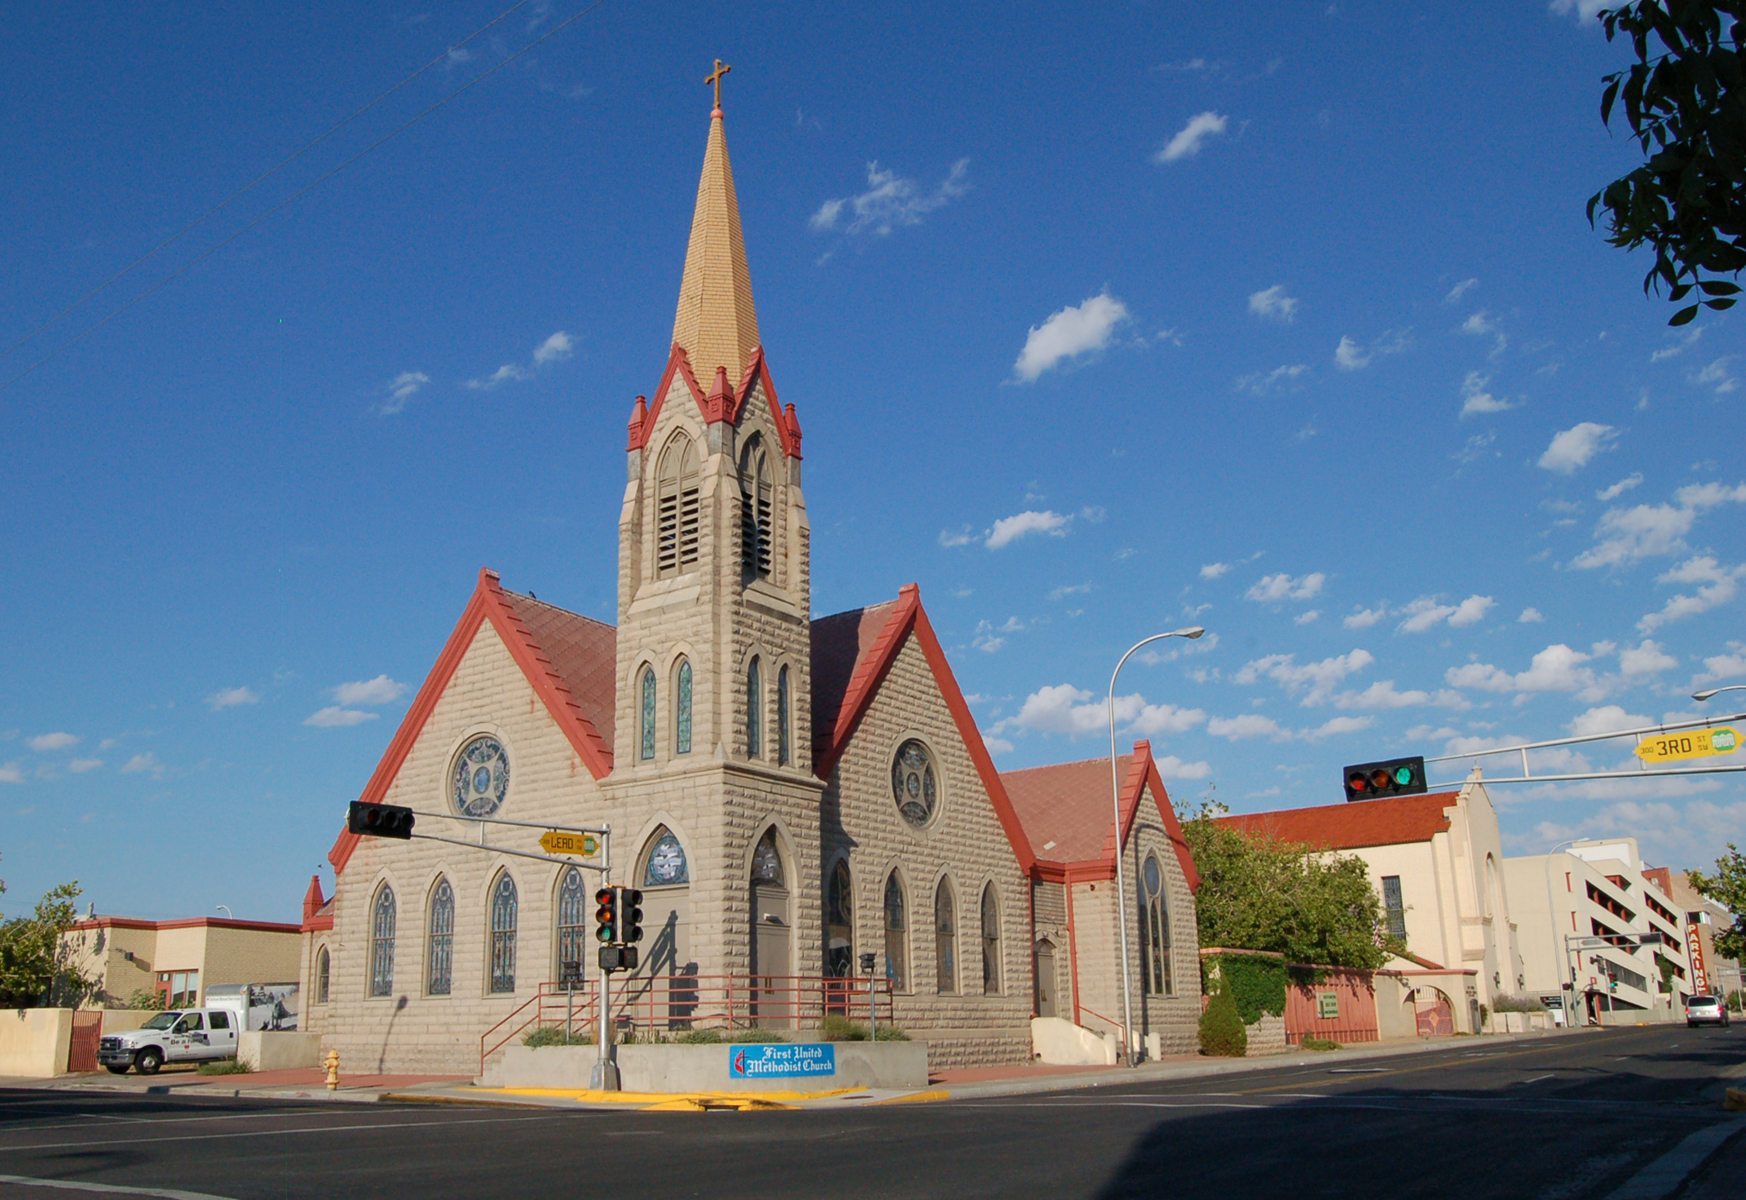 Albuquerque churches ask not to use masks